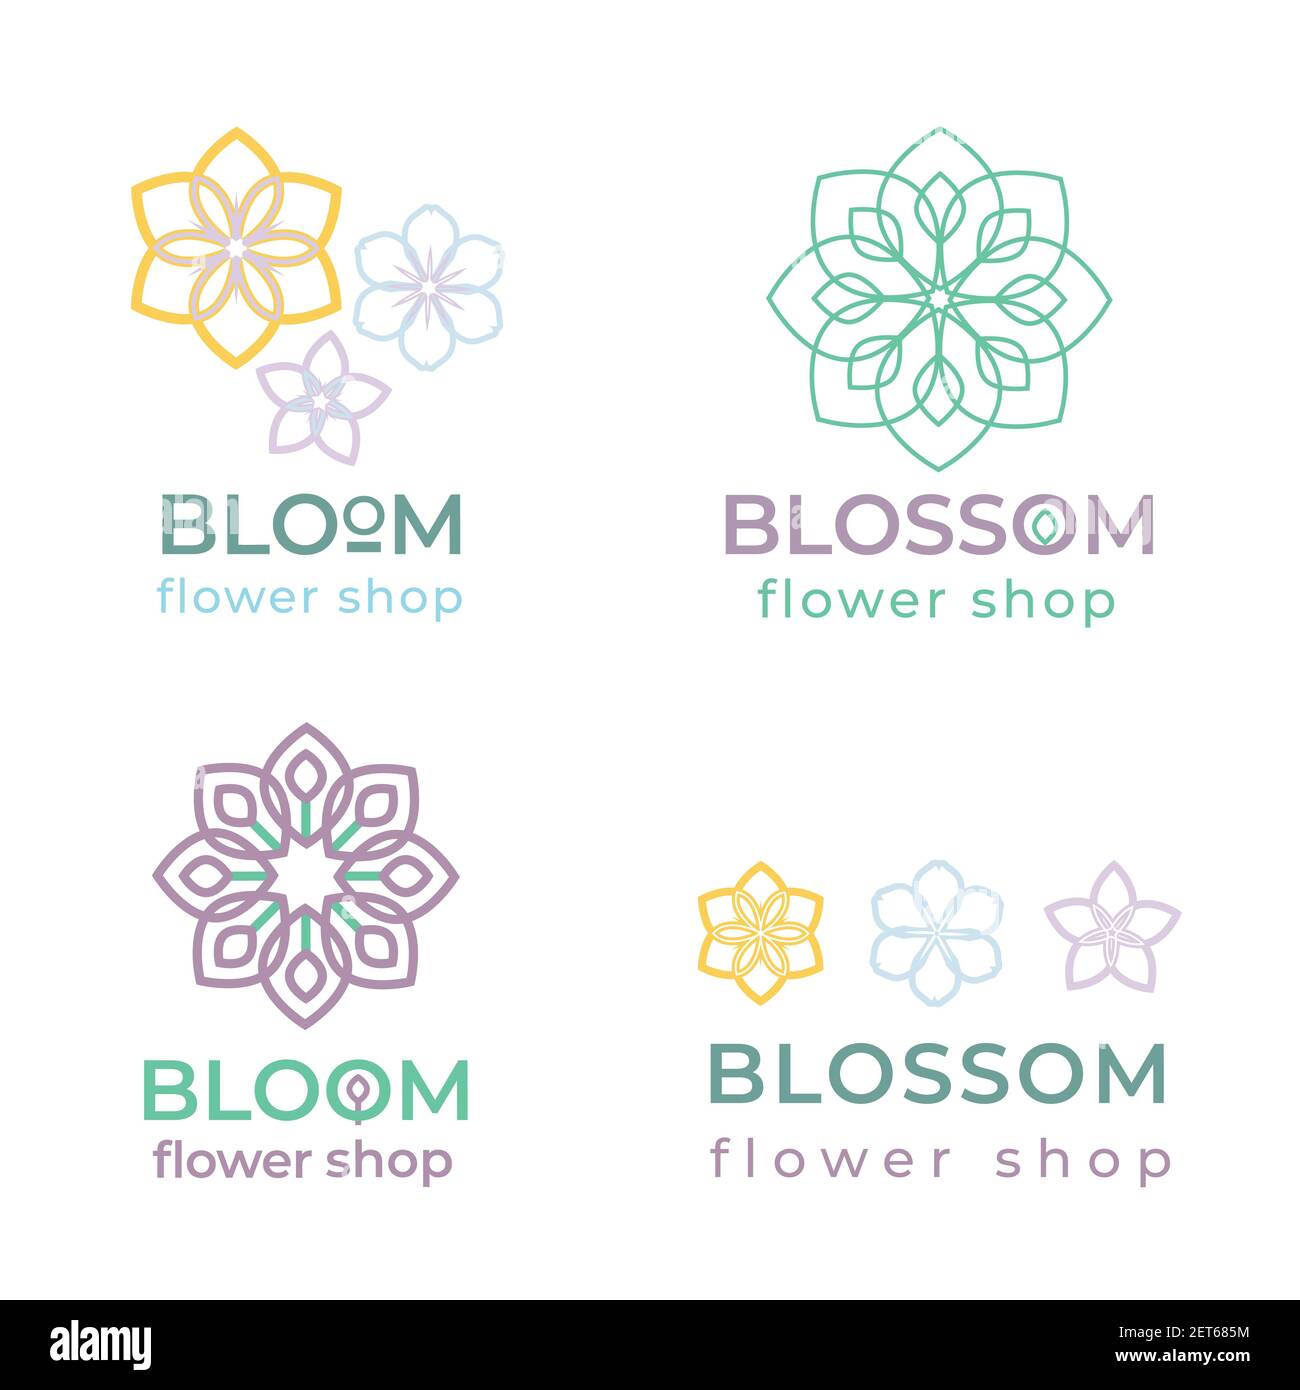 Flower shop vector logo design template in trendy linear style. Stock Vector